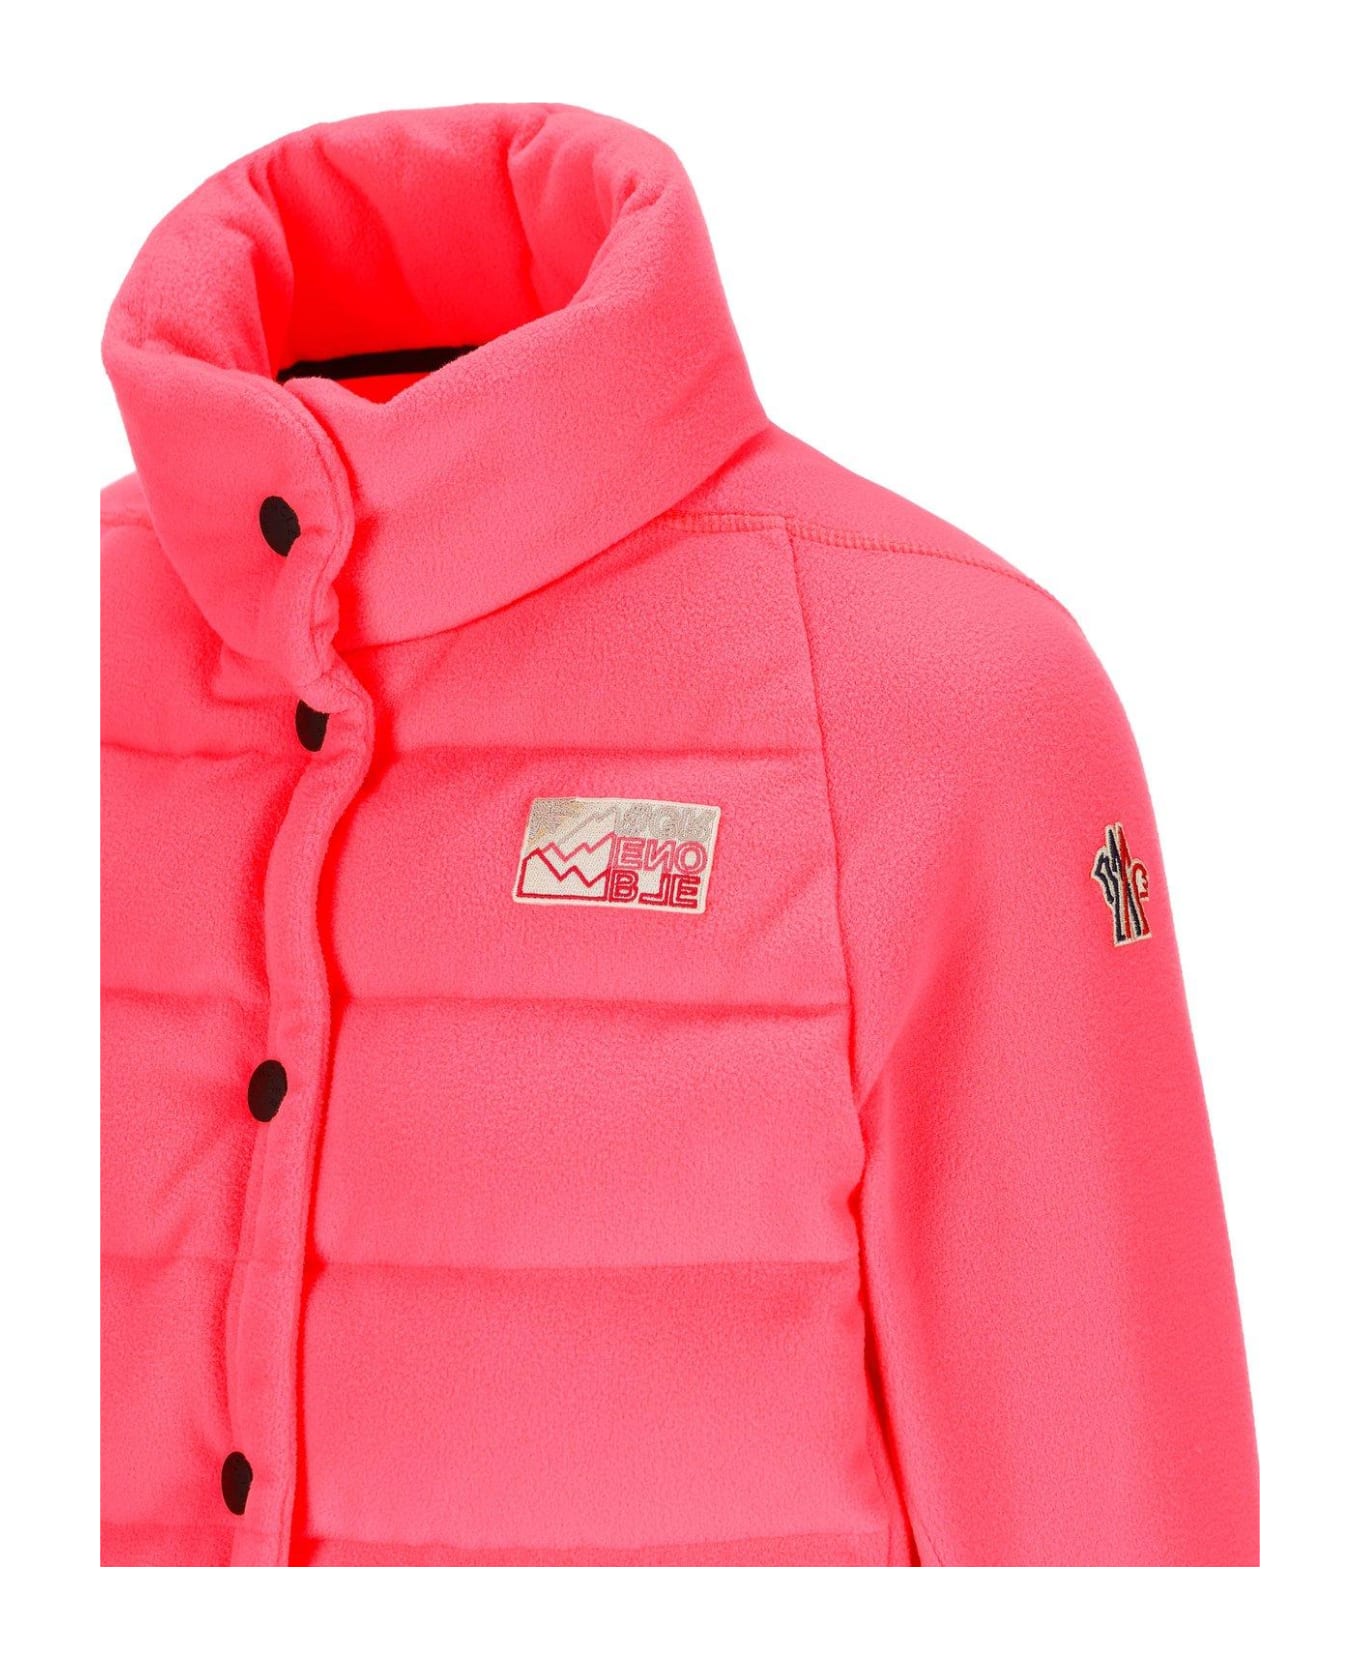 Moncler Grenoble Logo Patch Buttoned Jacket - Rosa